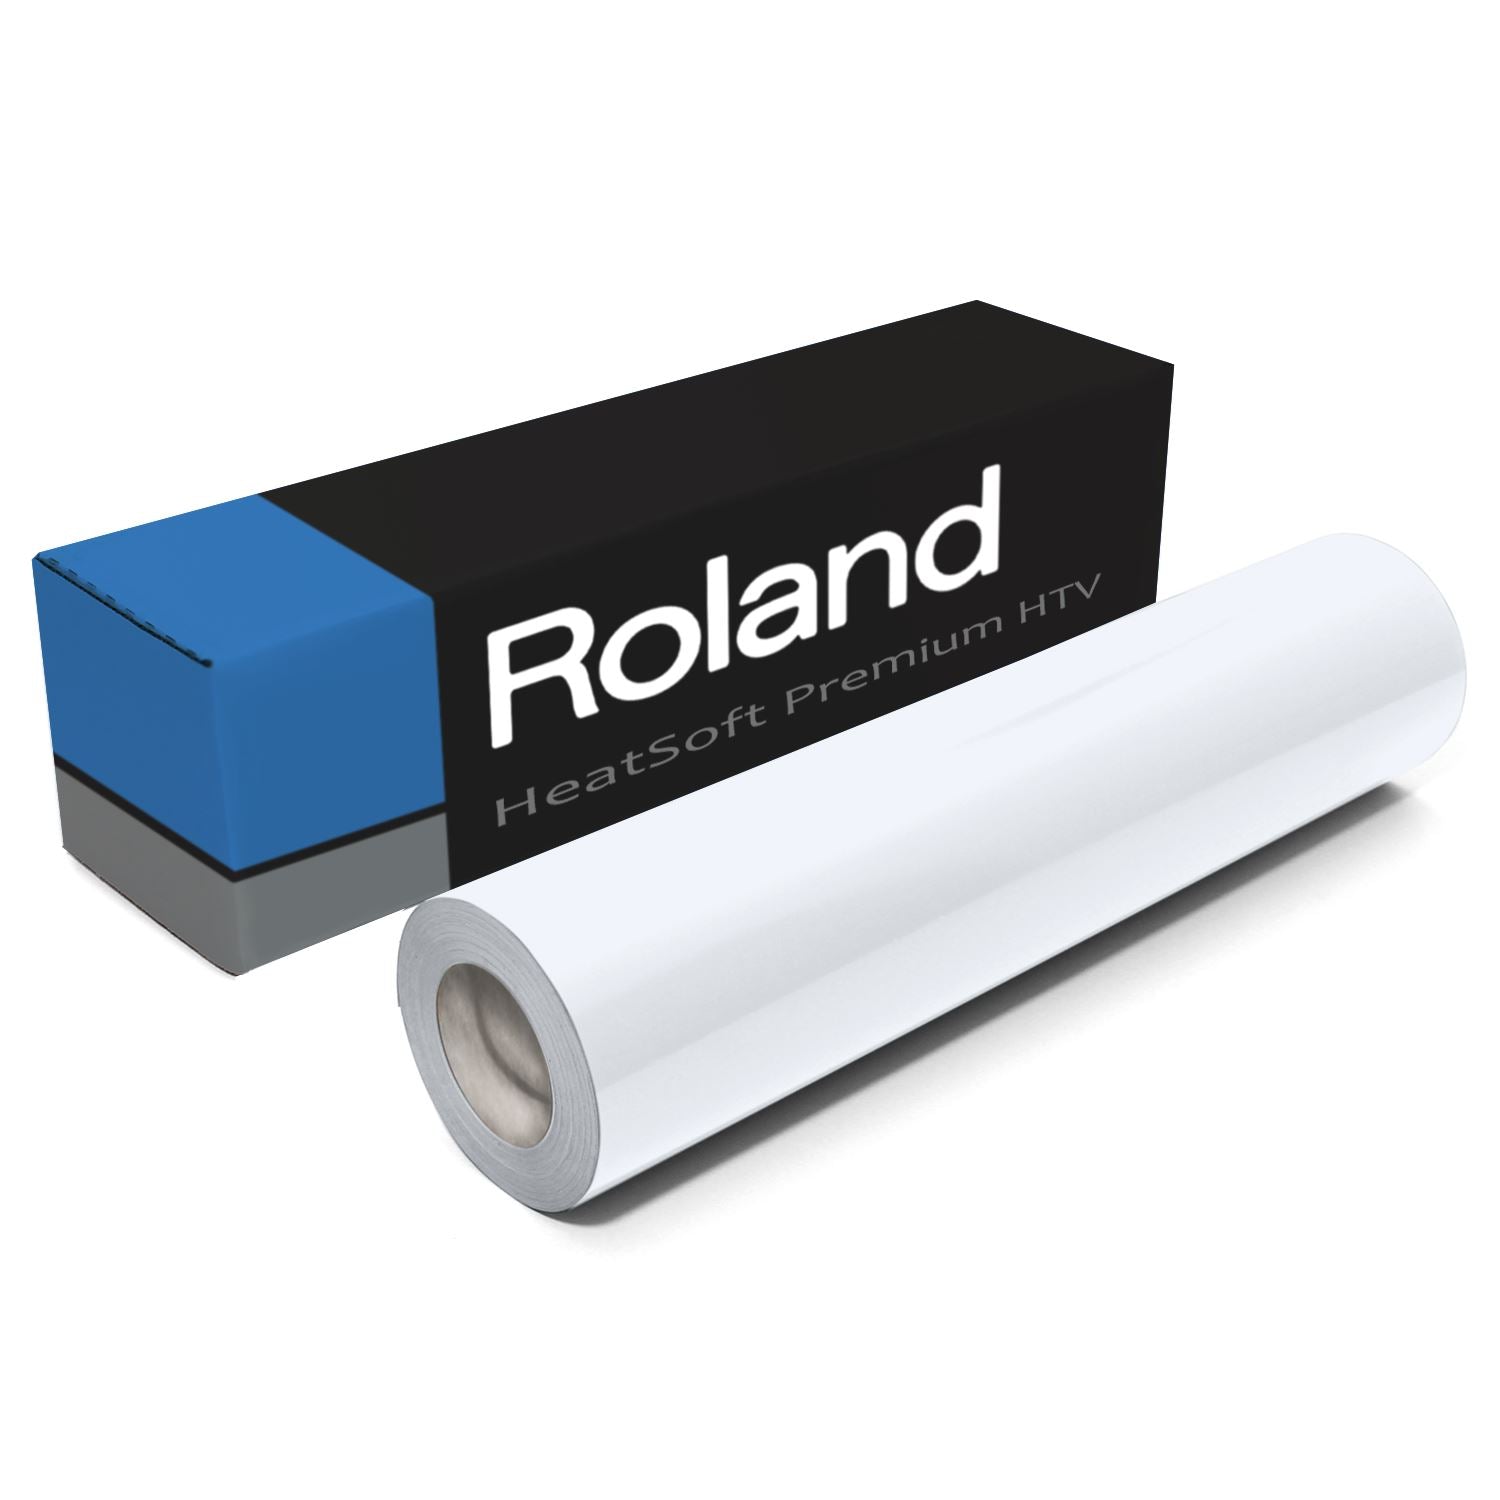 Roland HeatSoft Premium Heat Transfer Vinyl (HTV) - 20 x 75 FT